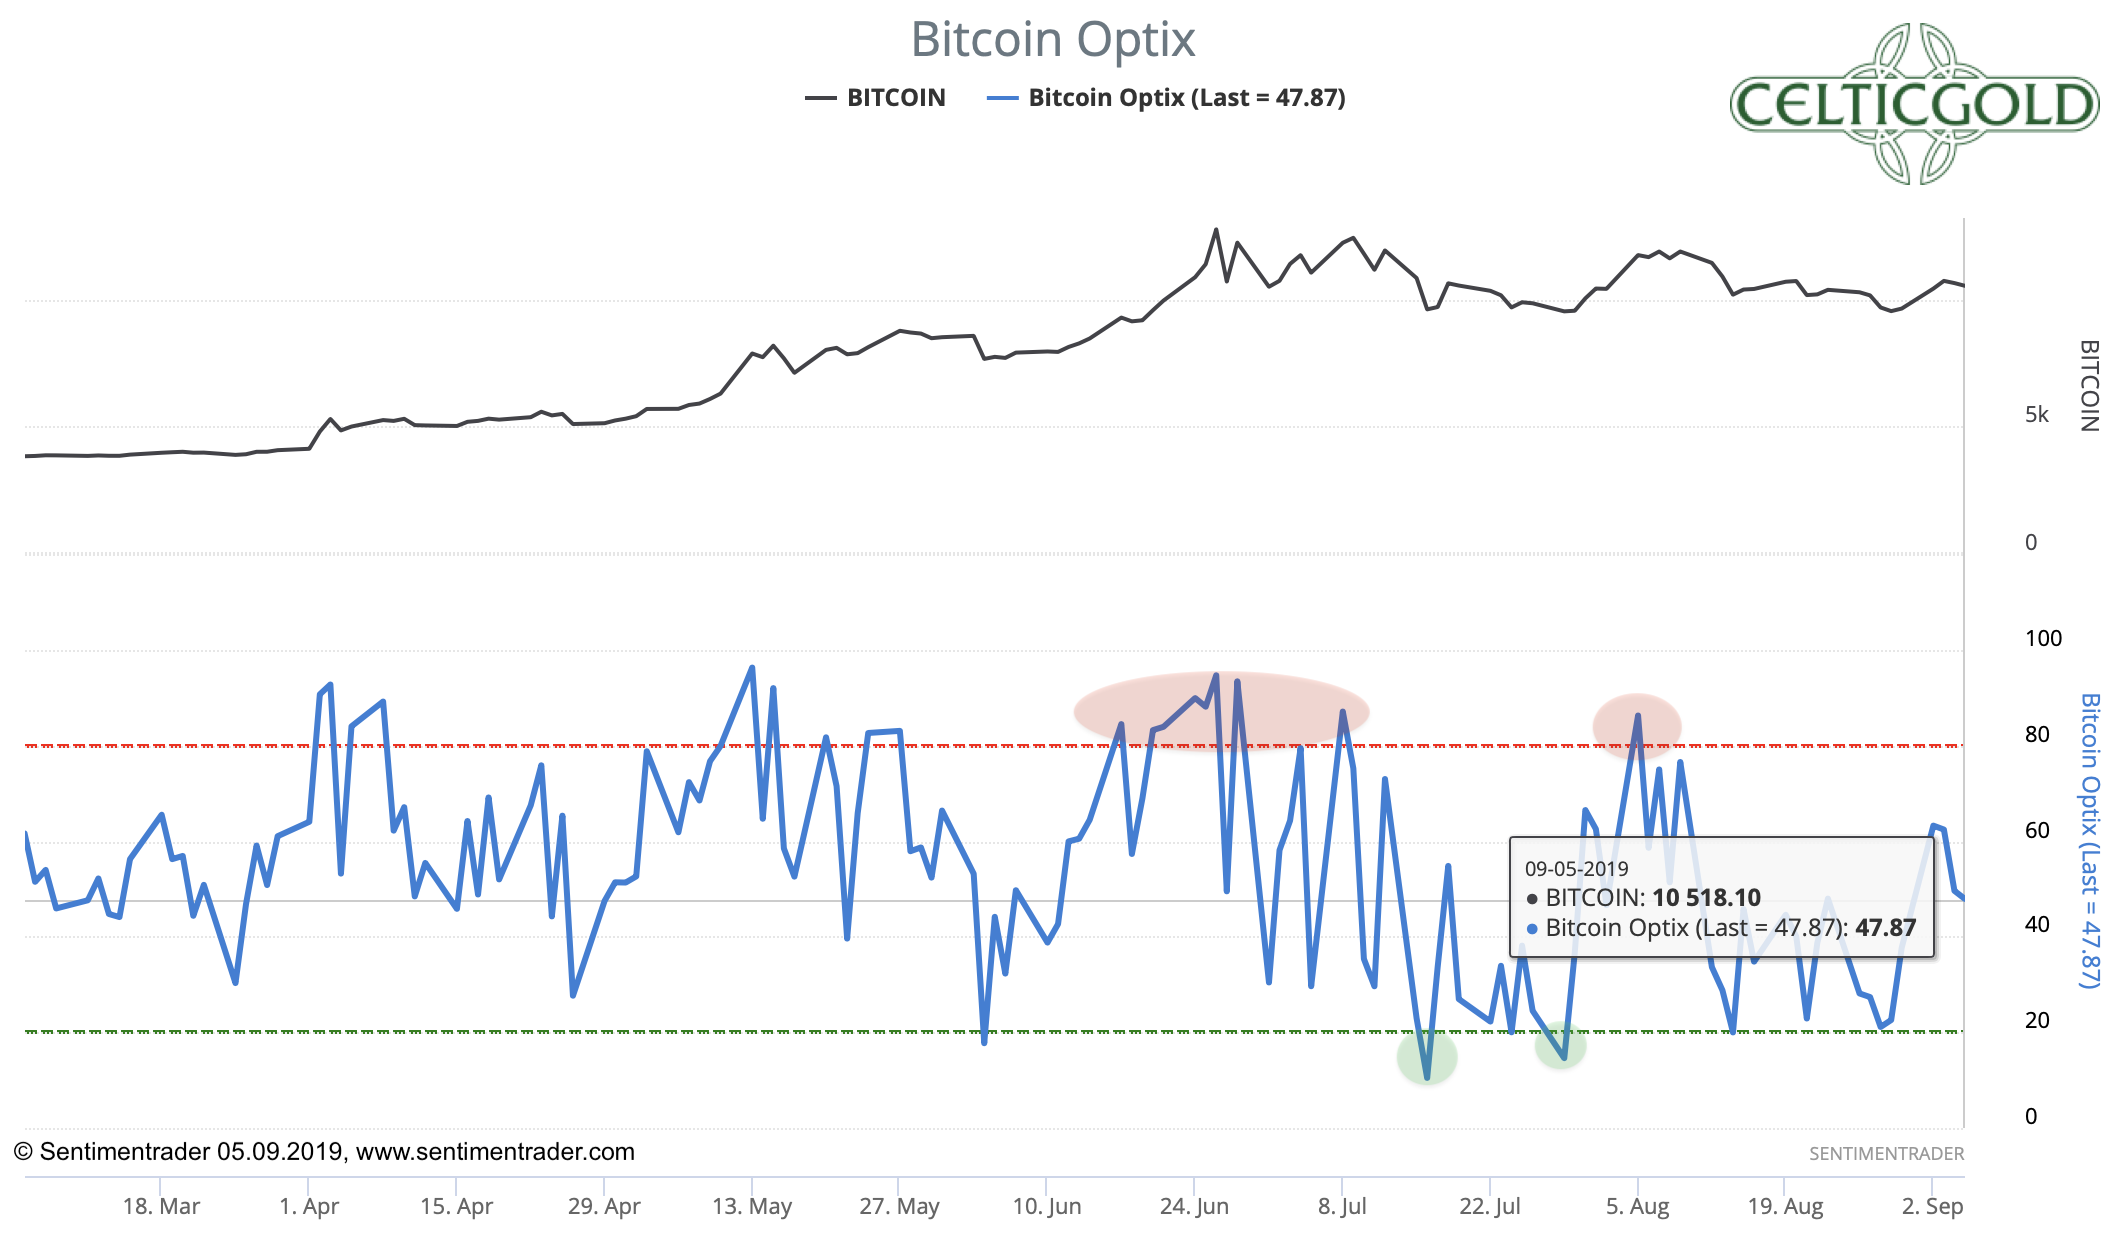 Bitcoin Optix as of September 5th, 2019. Source: Sentimentrader